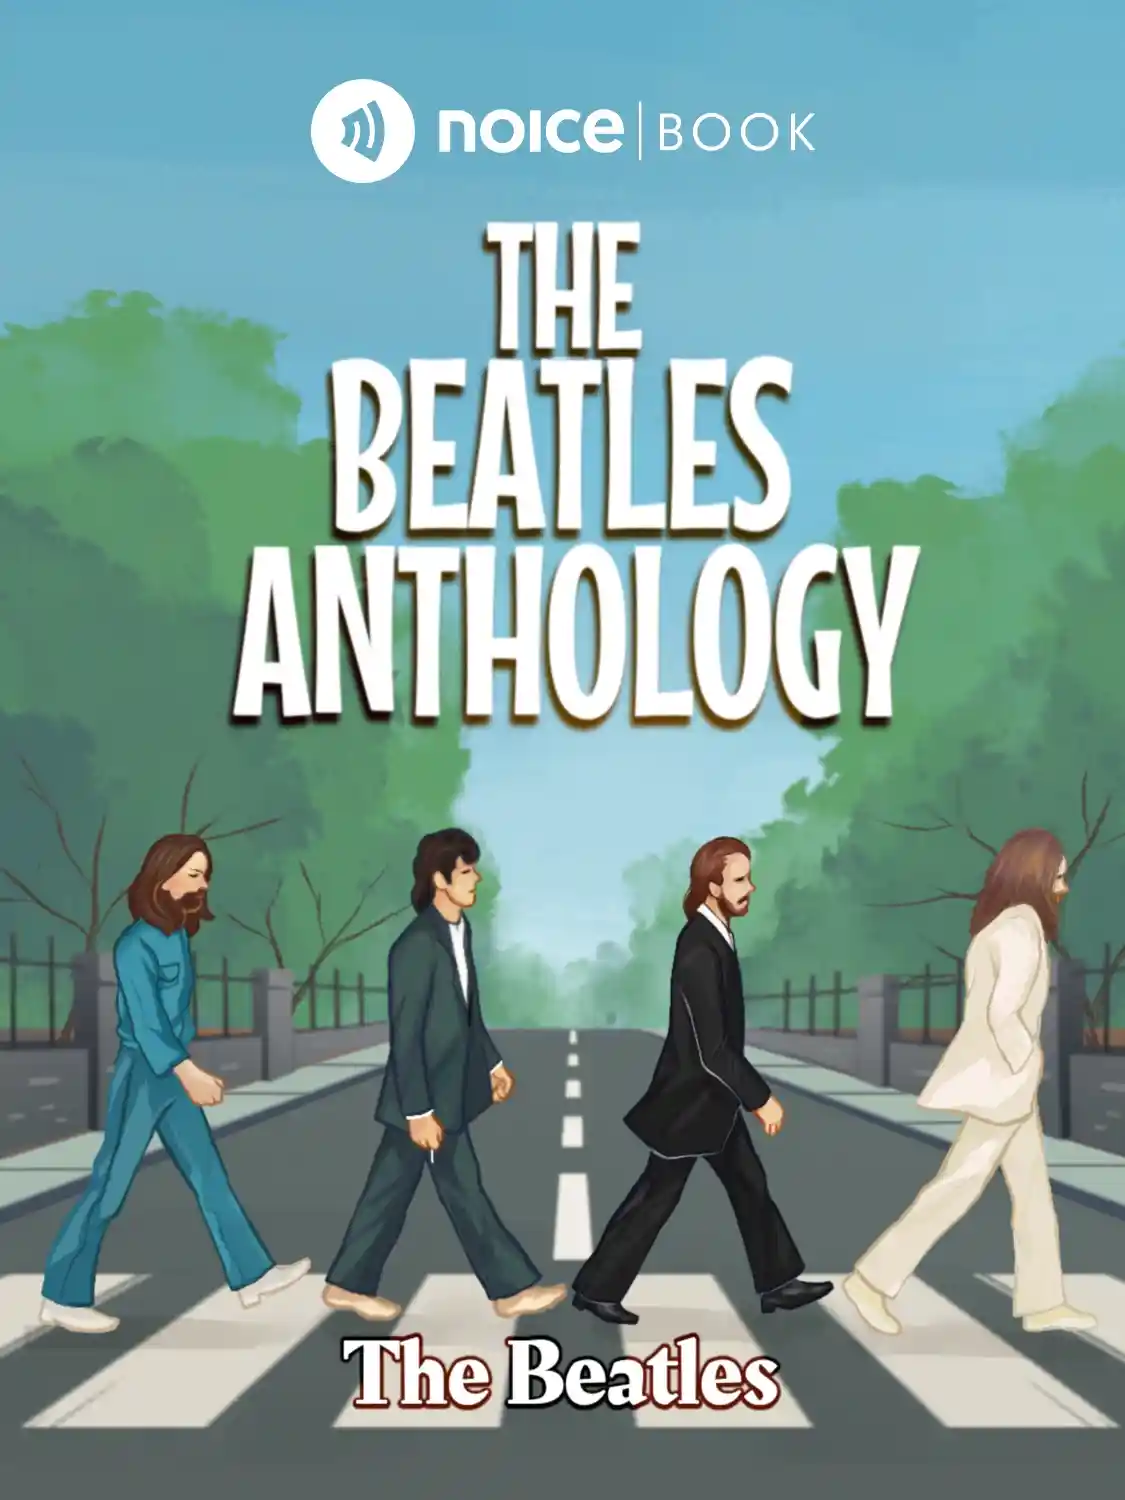 #8 1967: Manajer the Beatles meninggal dunia, band mulai kehilangan arah.